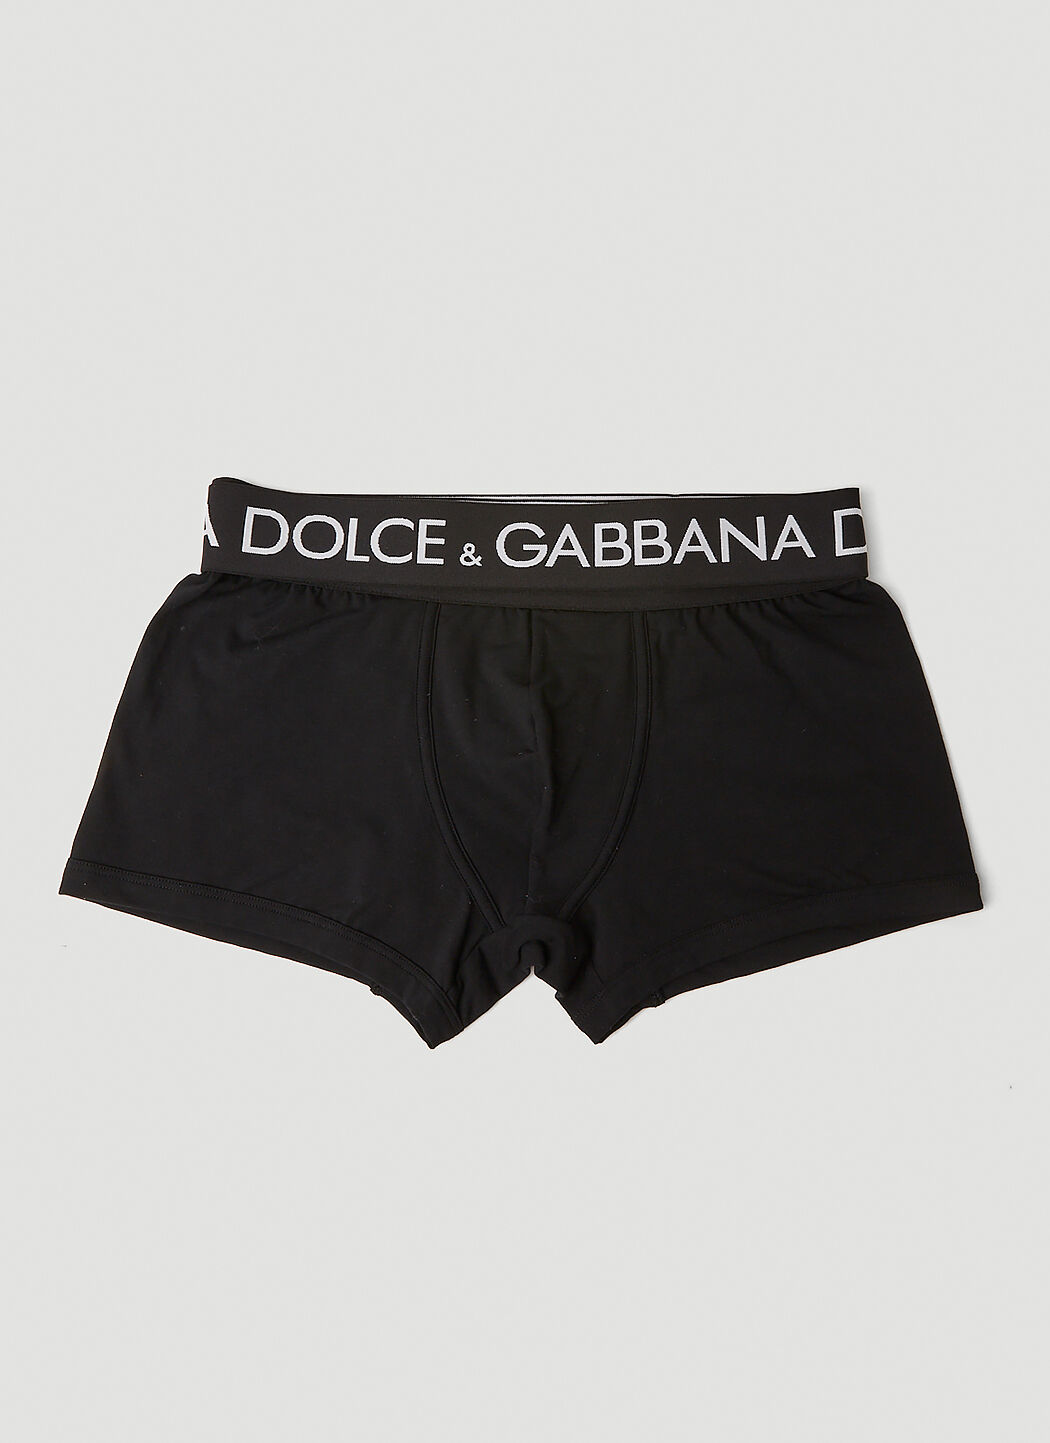 Dolce & Gabbana 로고 웨이스트밴드 박서 브리프 Black dol0156003